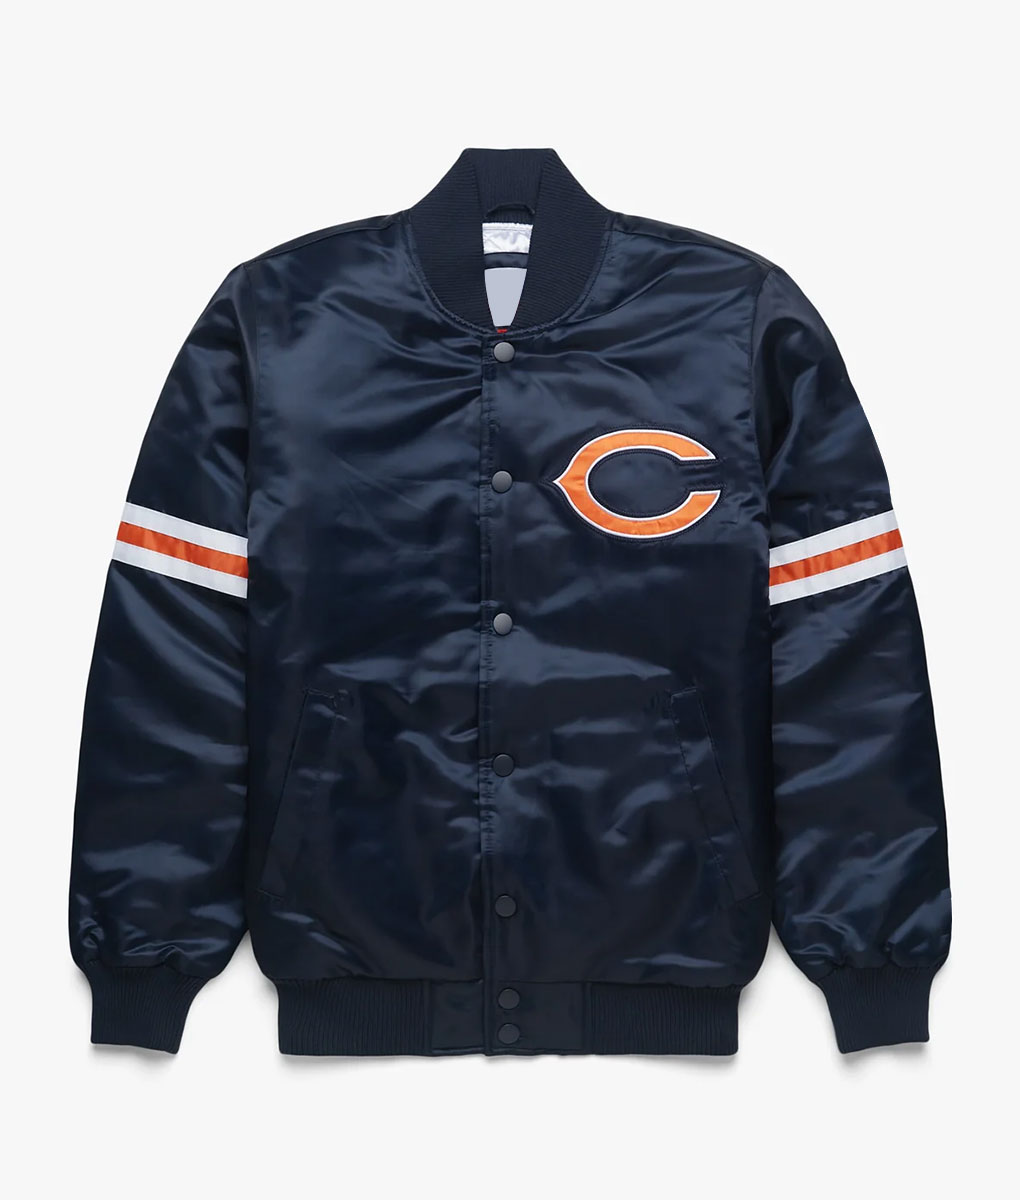 Chicago-Bears-Navy-Blue-Bomber-Jacket-(2)